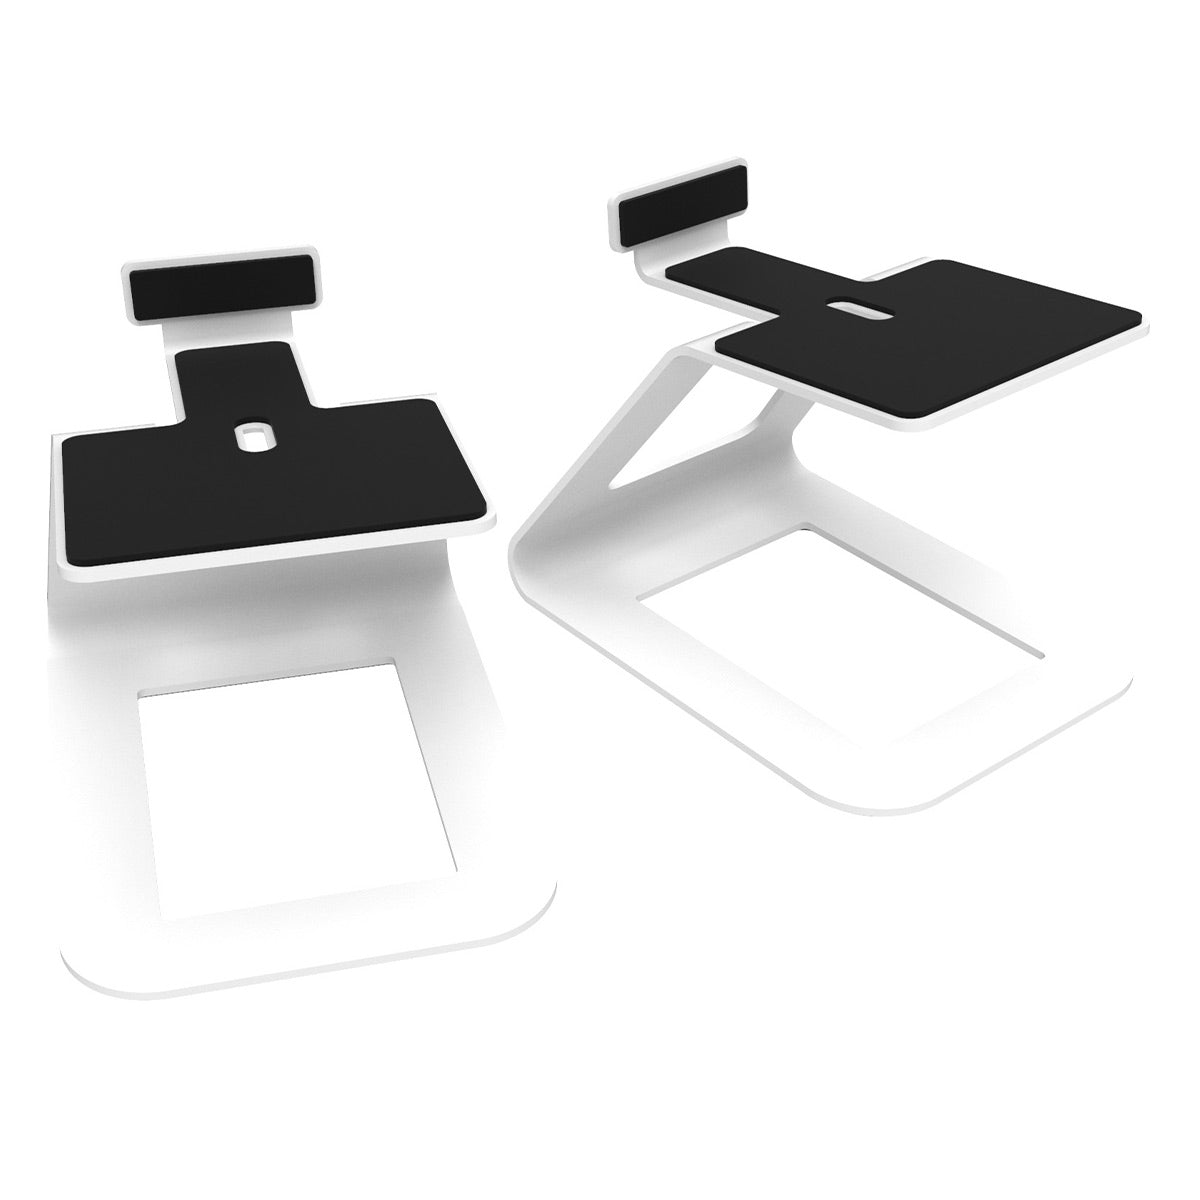 Kanto YU6 Powered Bookshelf Speakers (Matte White) with SE6 Elevated Desktop Speaker Stands (White)